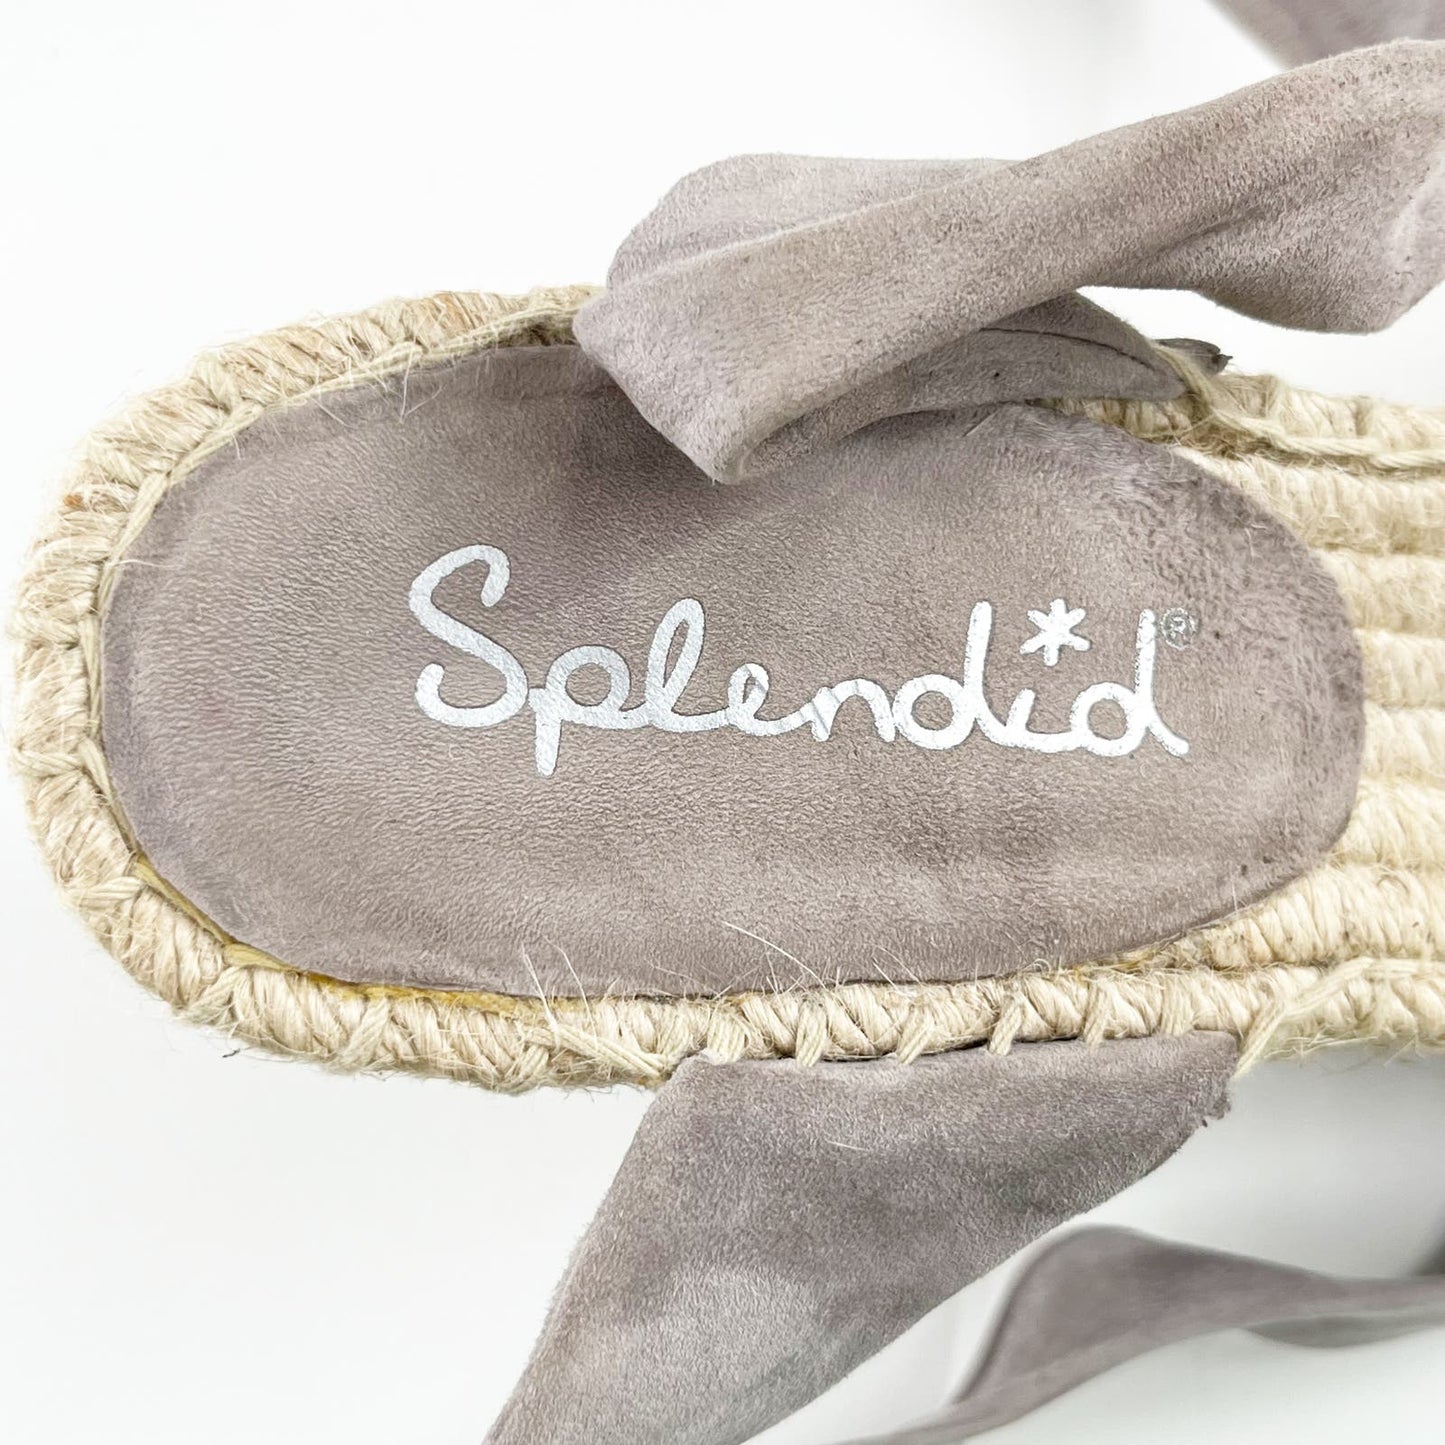 Splendid Joelle Suede Ankle Tie Wrap Leather Espadrille Wedge Sandal Gray 7